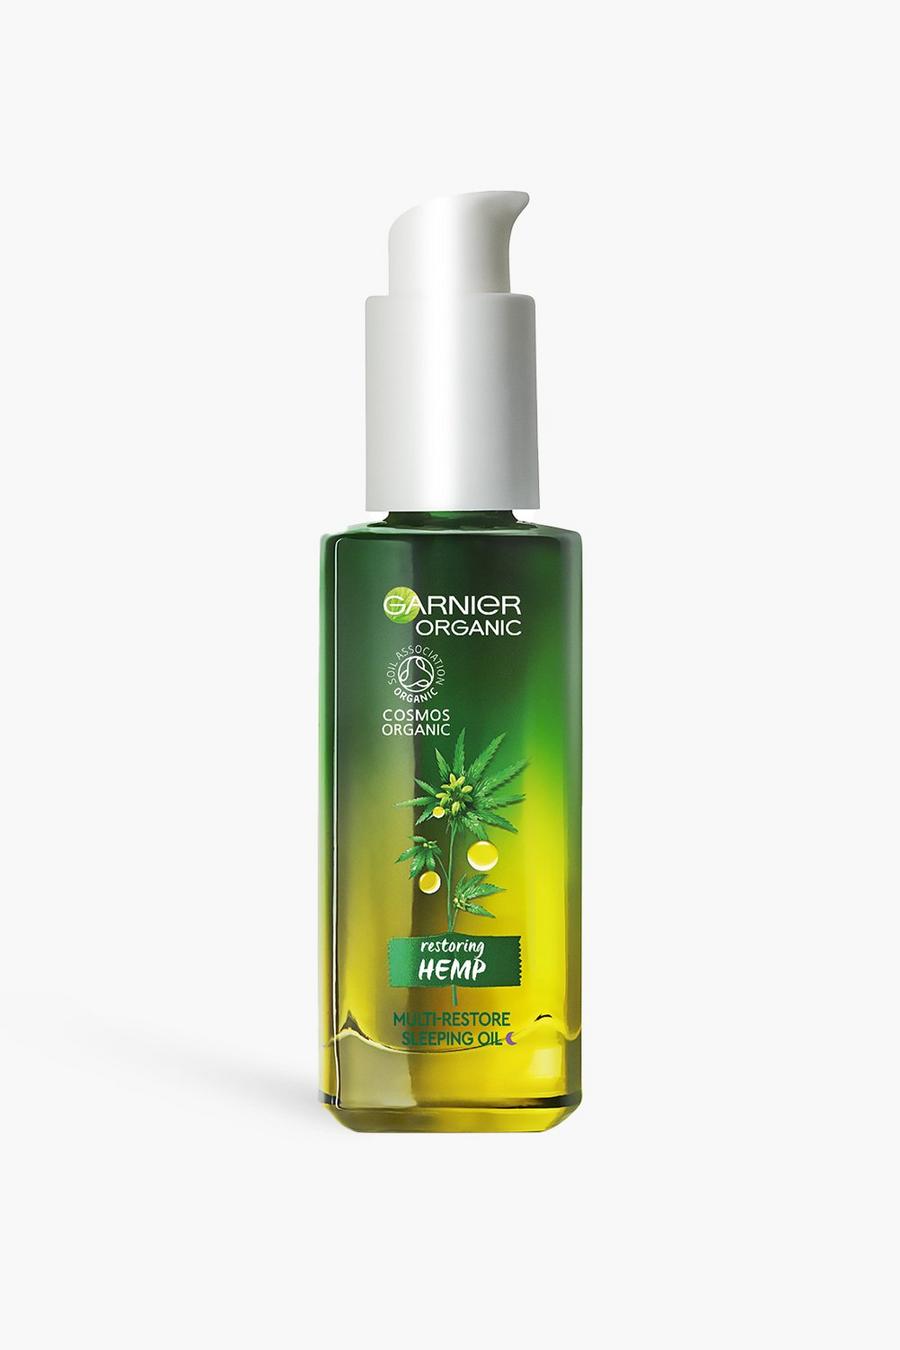 Green Garnier Organic Hemp Multi-Restore Night Sleeping Oil 30ml